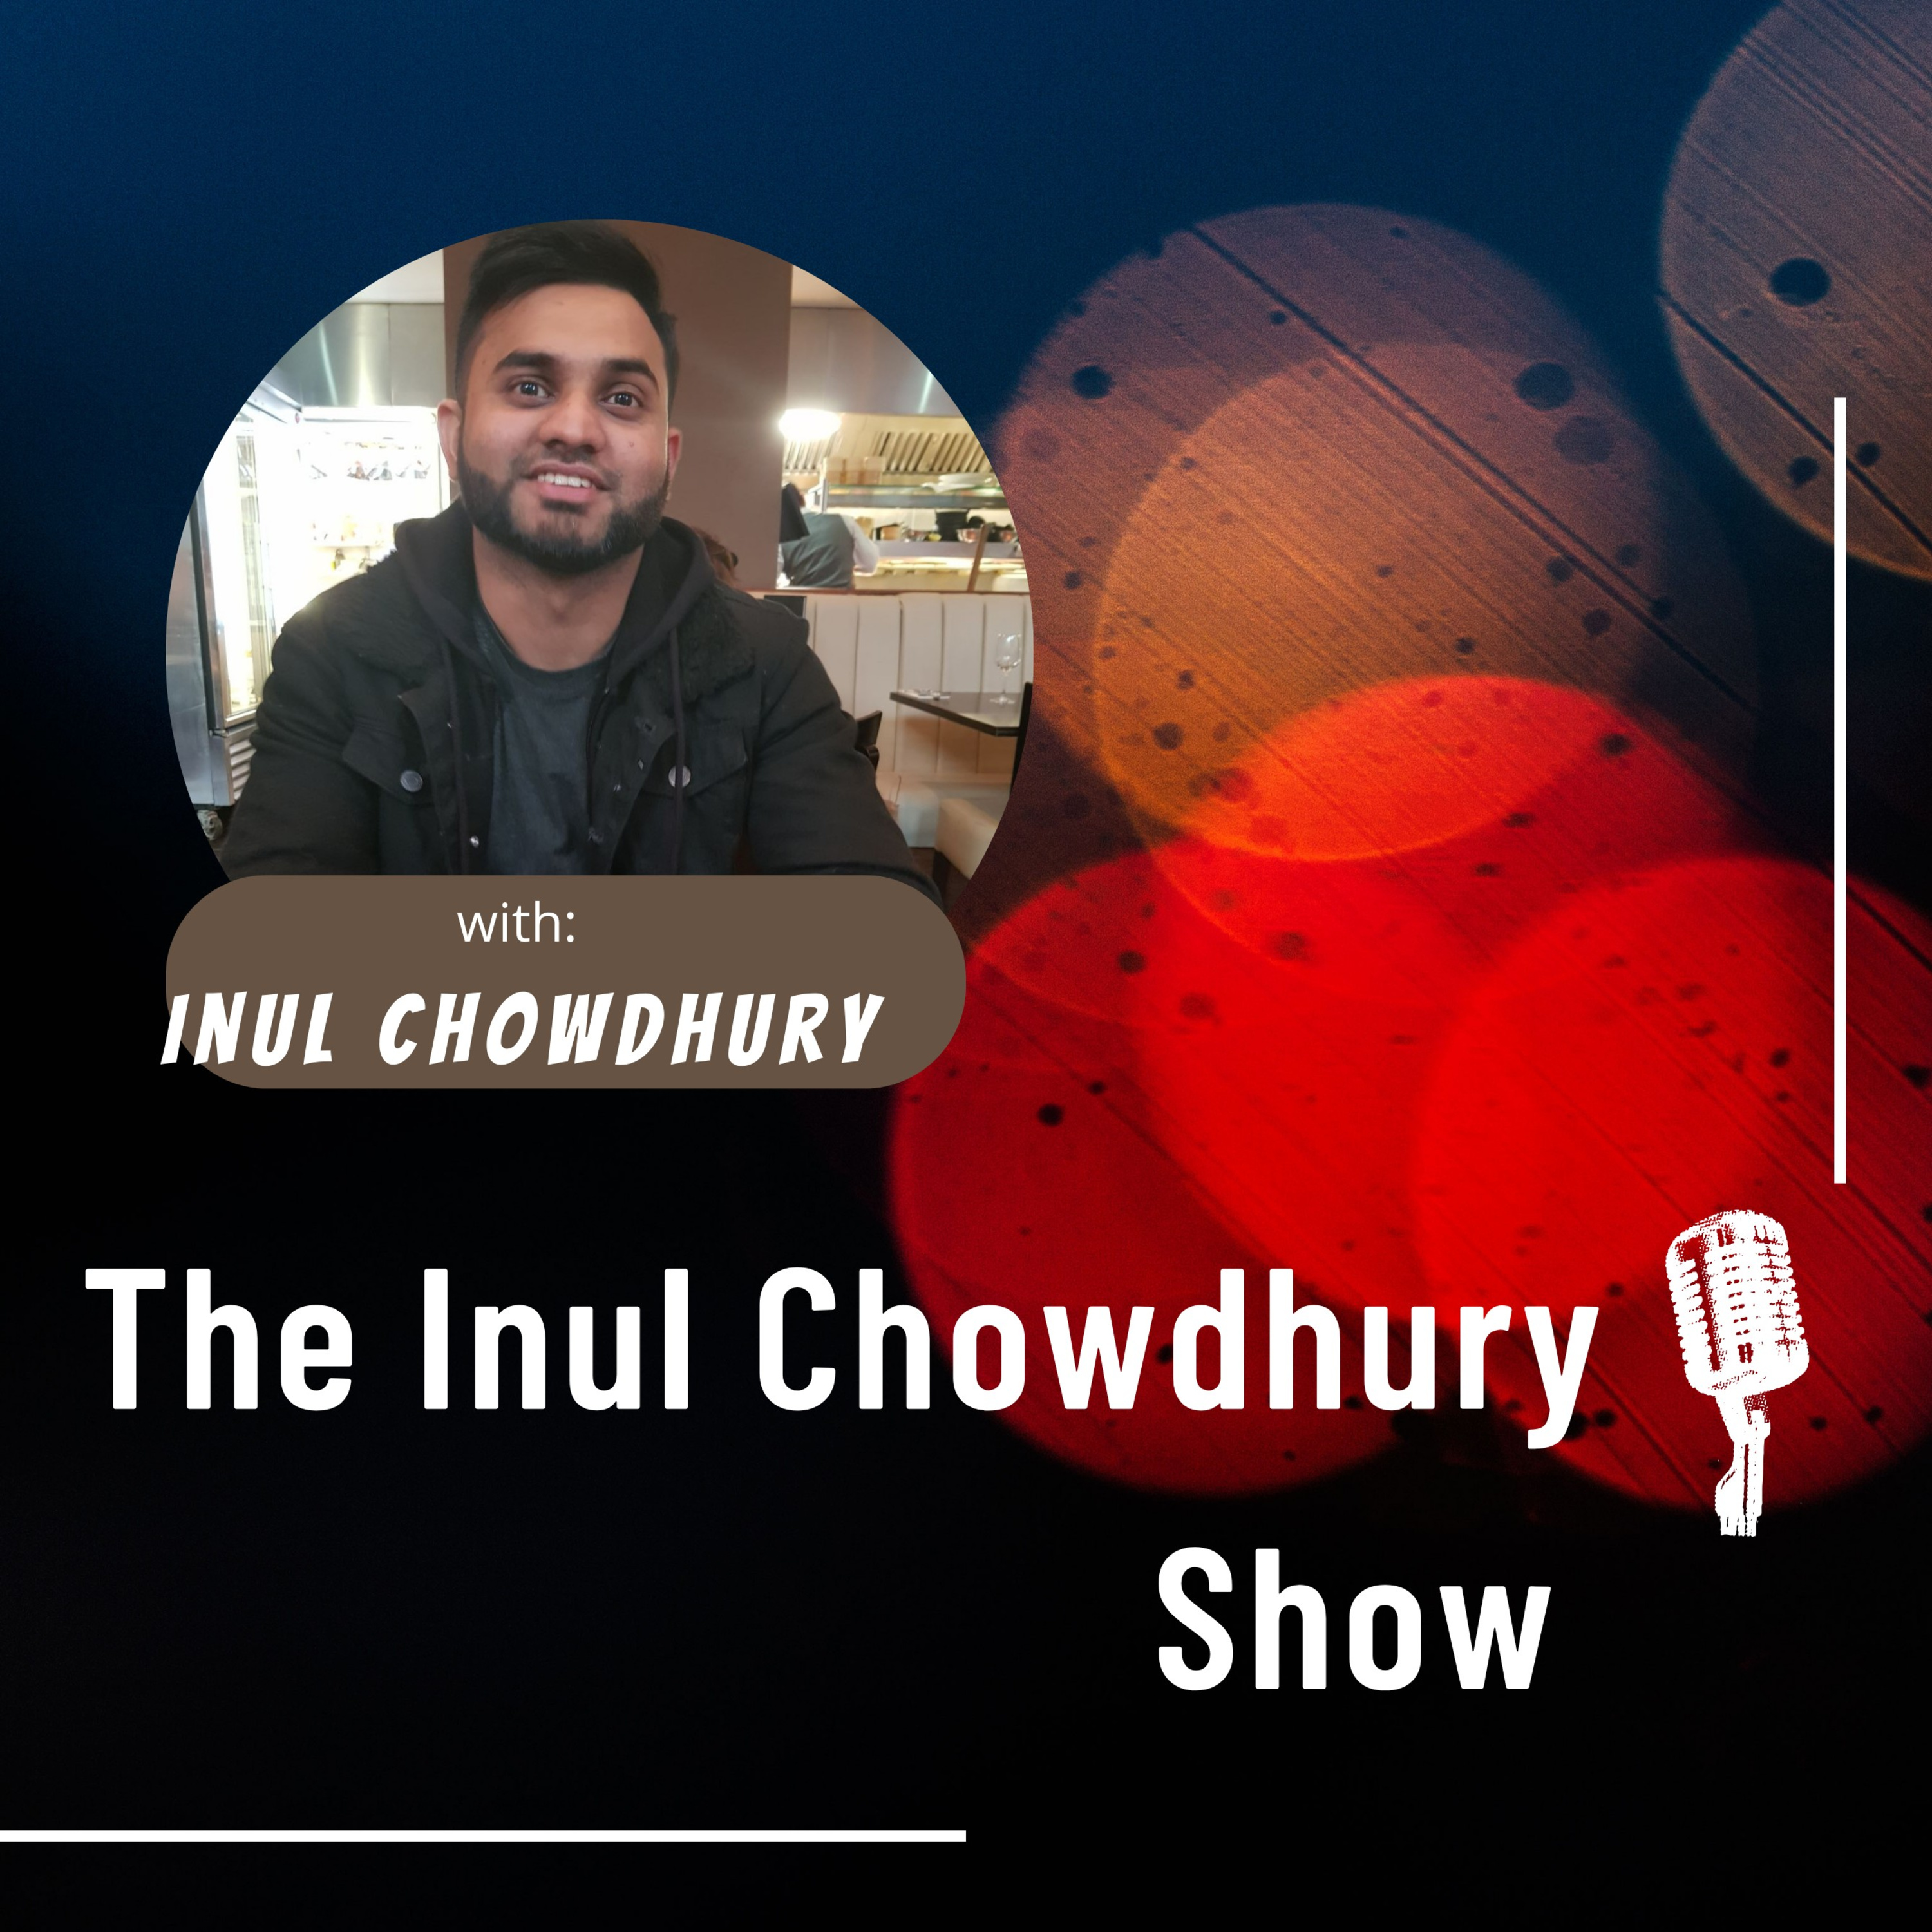 The Inul Chowdhury Show